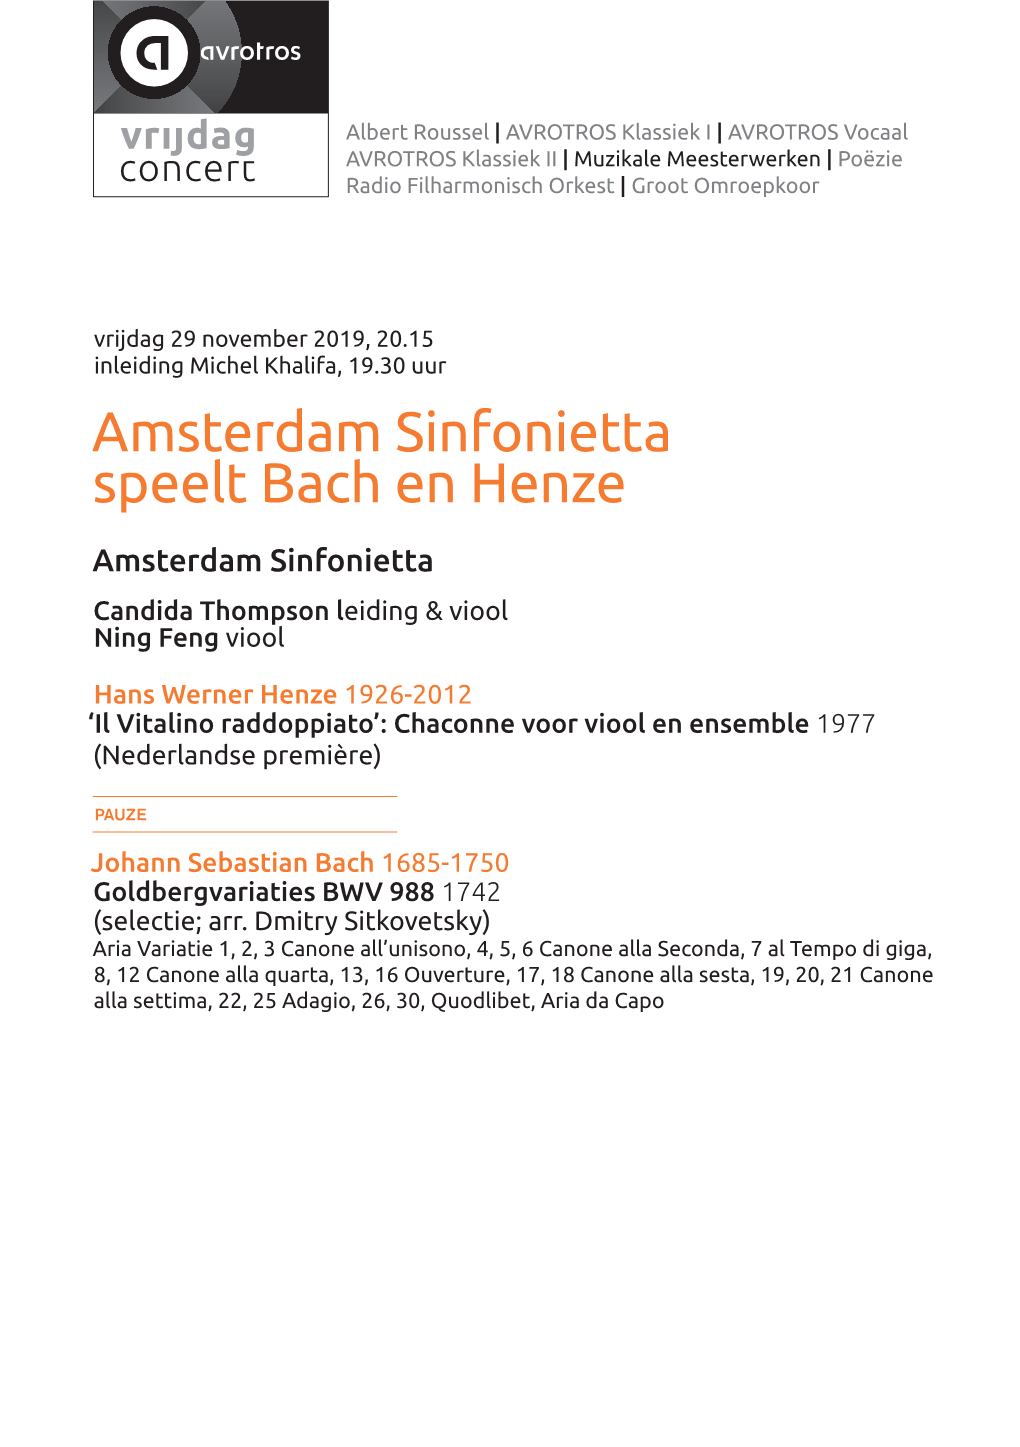 Amsterdam Sinfonietta Speelt Bach En Henze